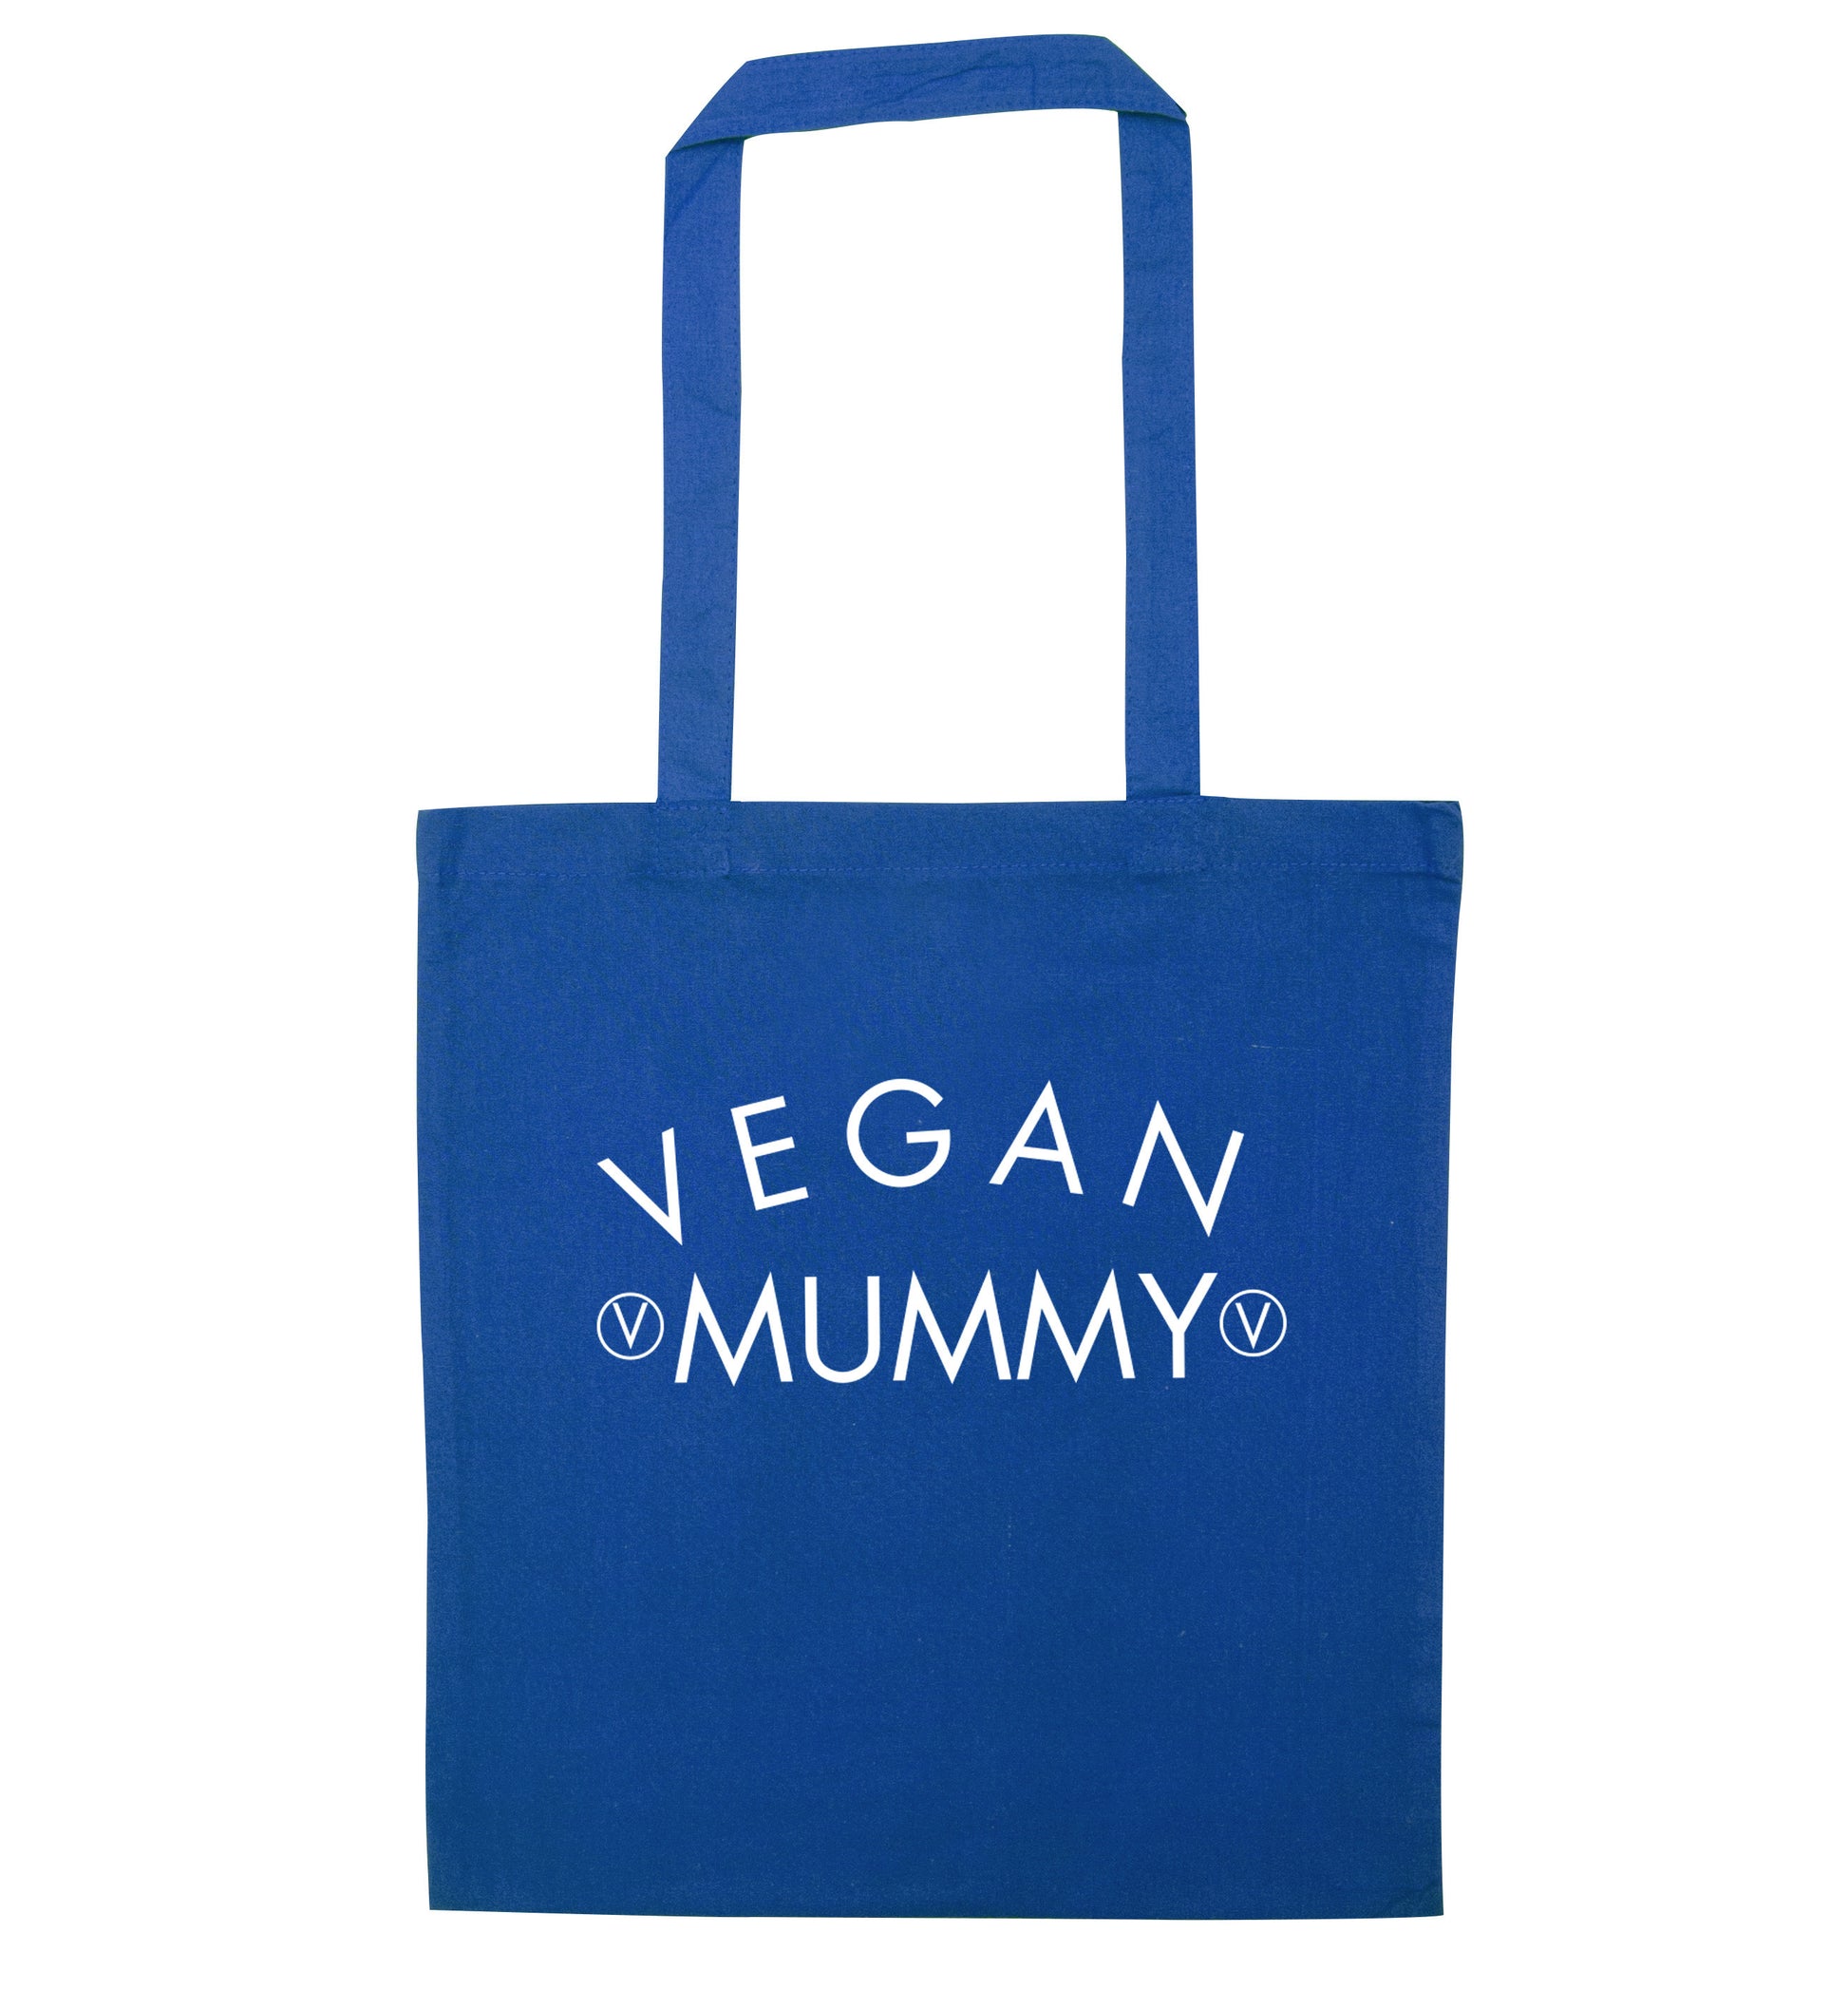 Vegan mummy blue tote bag